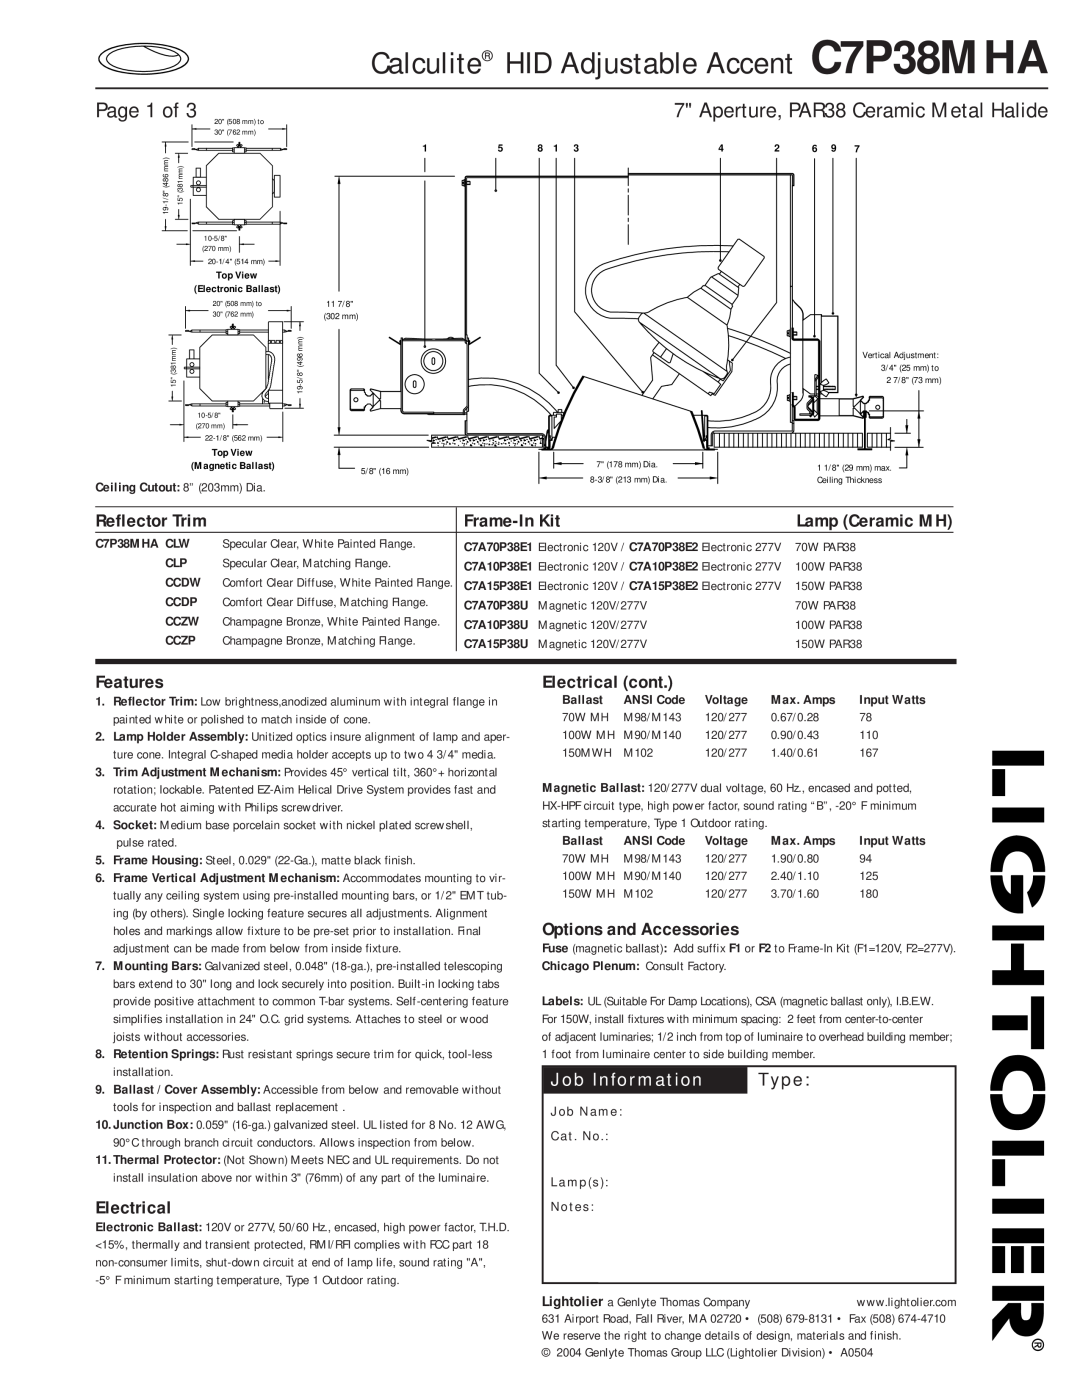 Lightolier manual Calculite HID Adjustable Accent C7P38MHA, Page 1 of, Aperture, PAR38 Ceramic Metal Halide, Type, Ccdw 